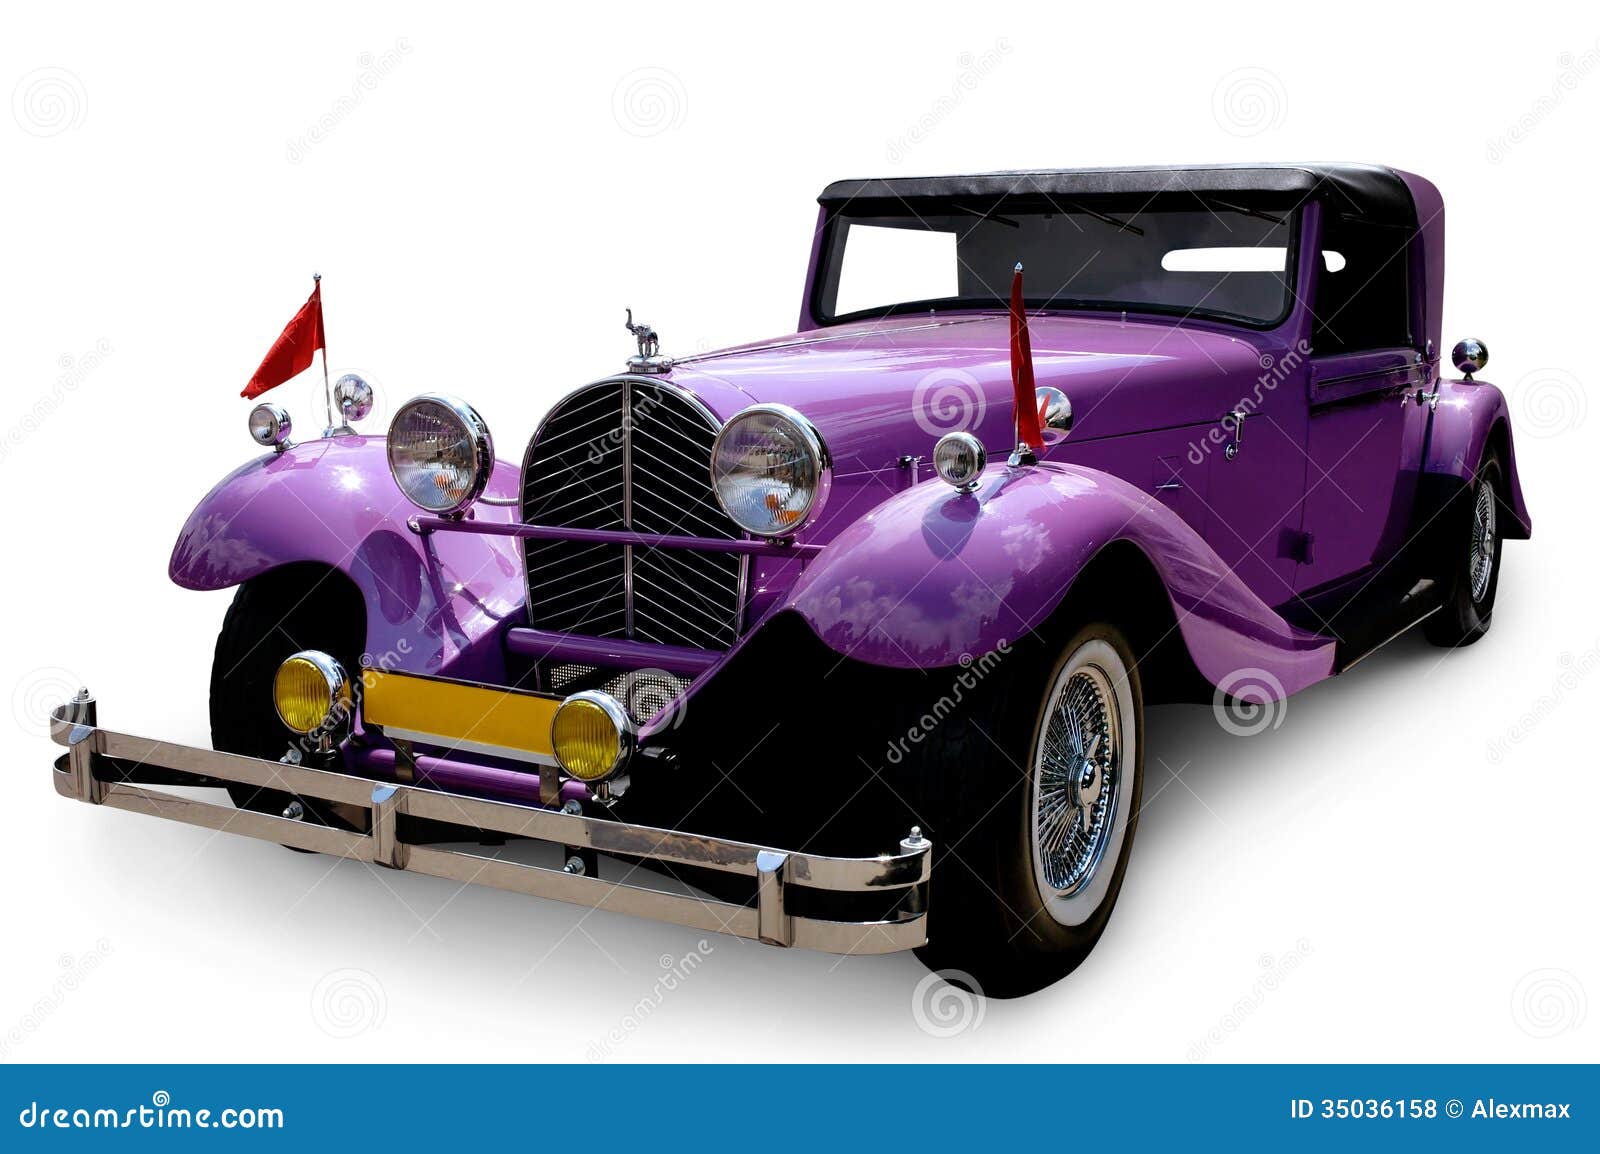 classic restored custom vintage car